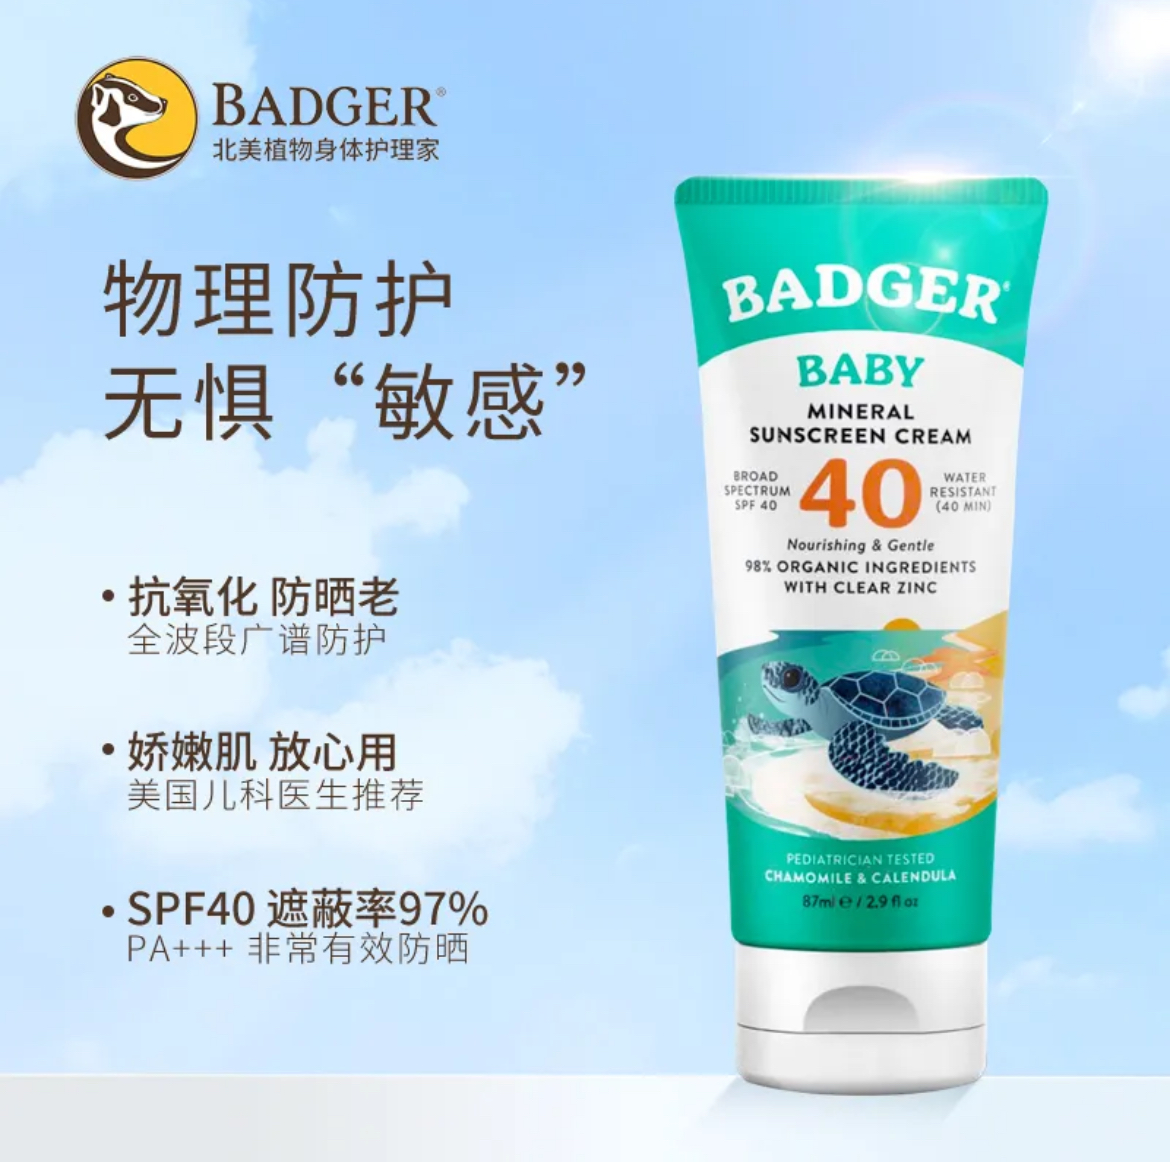 Badger 我爱自然防霜SPF40物理防晒隔离保湿孕妇儿童可用87ml